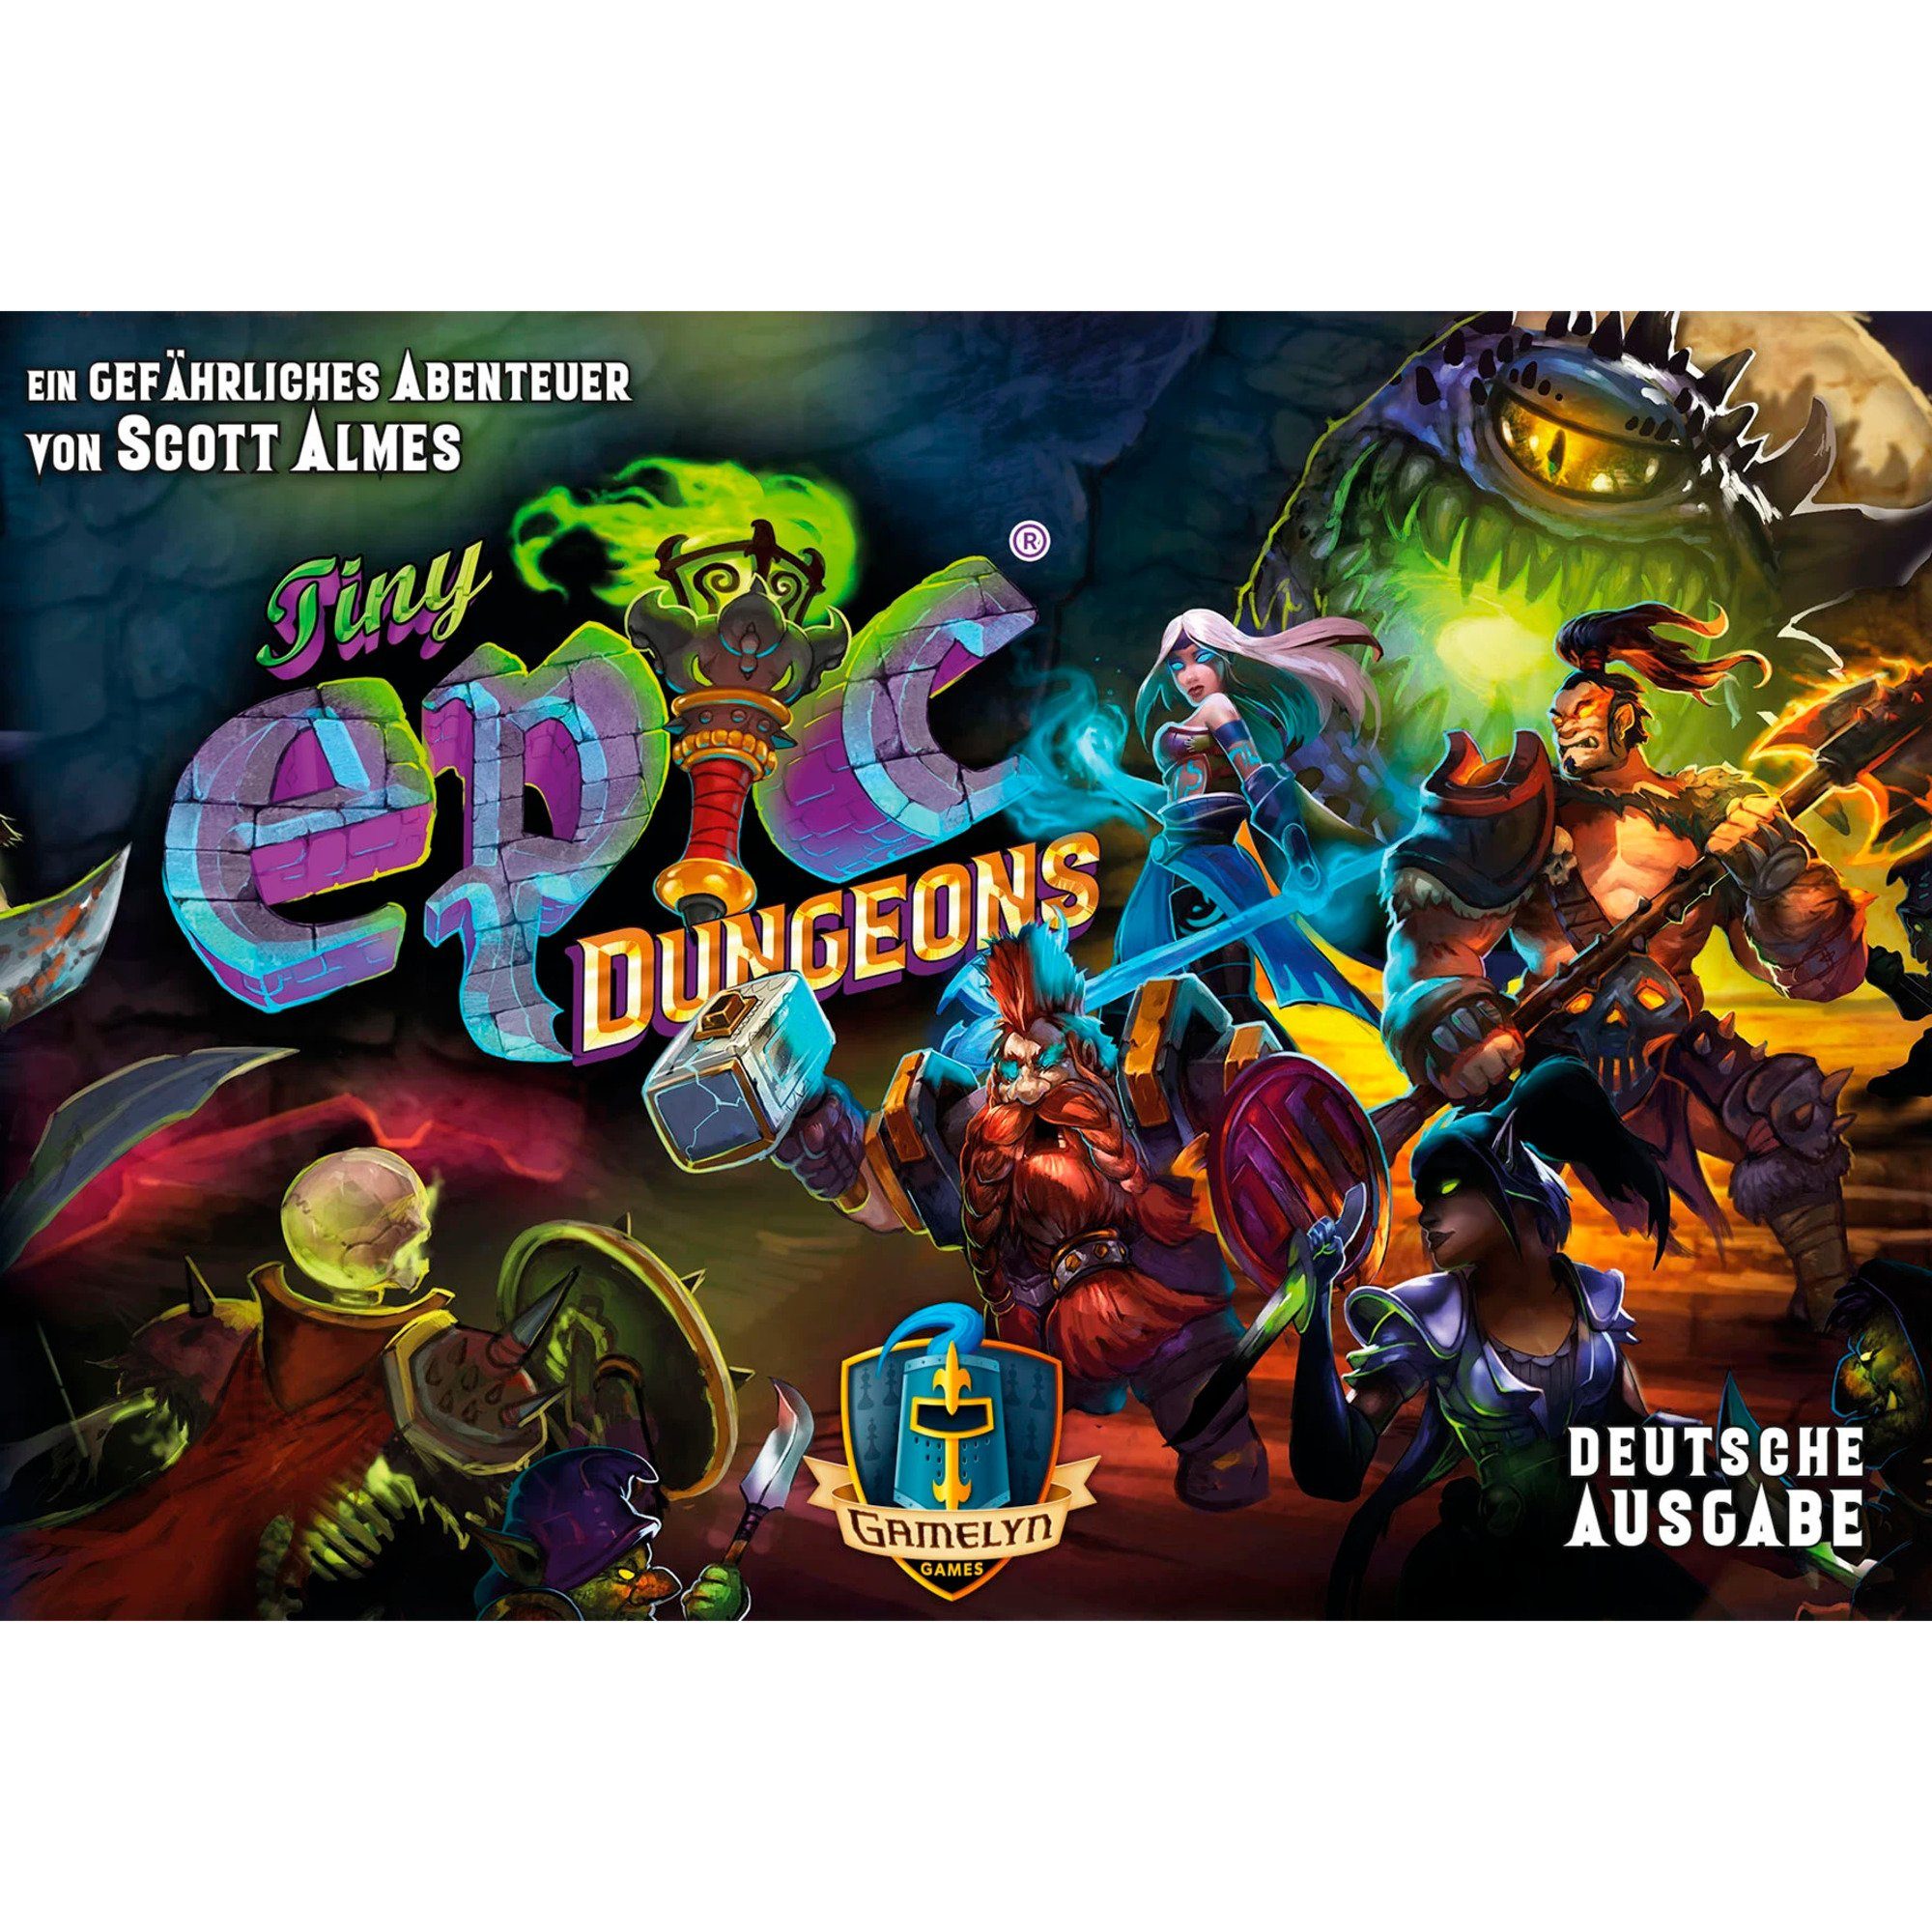 Dungeons, Asmodee Brettspiel Spiel, Tiny Asmodee Epic